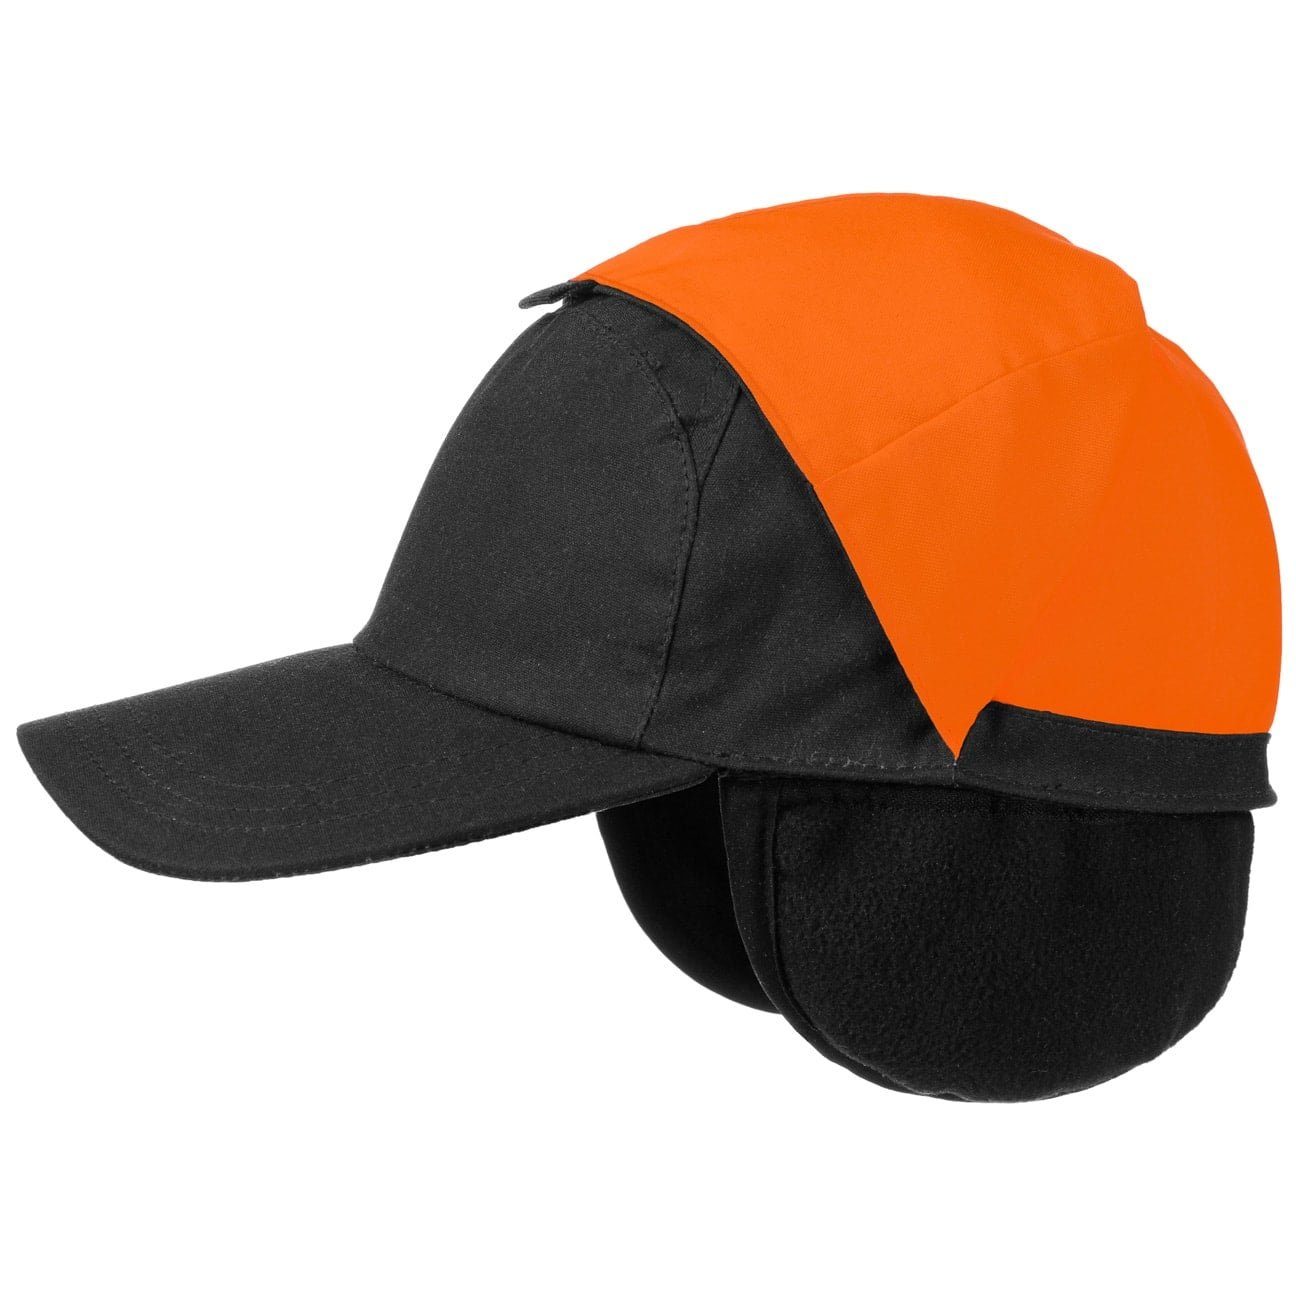 Lierys Baseball Cap (1-St) Baseballcap in schwarz Italy mit Made Schirm